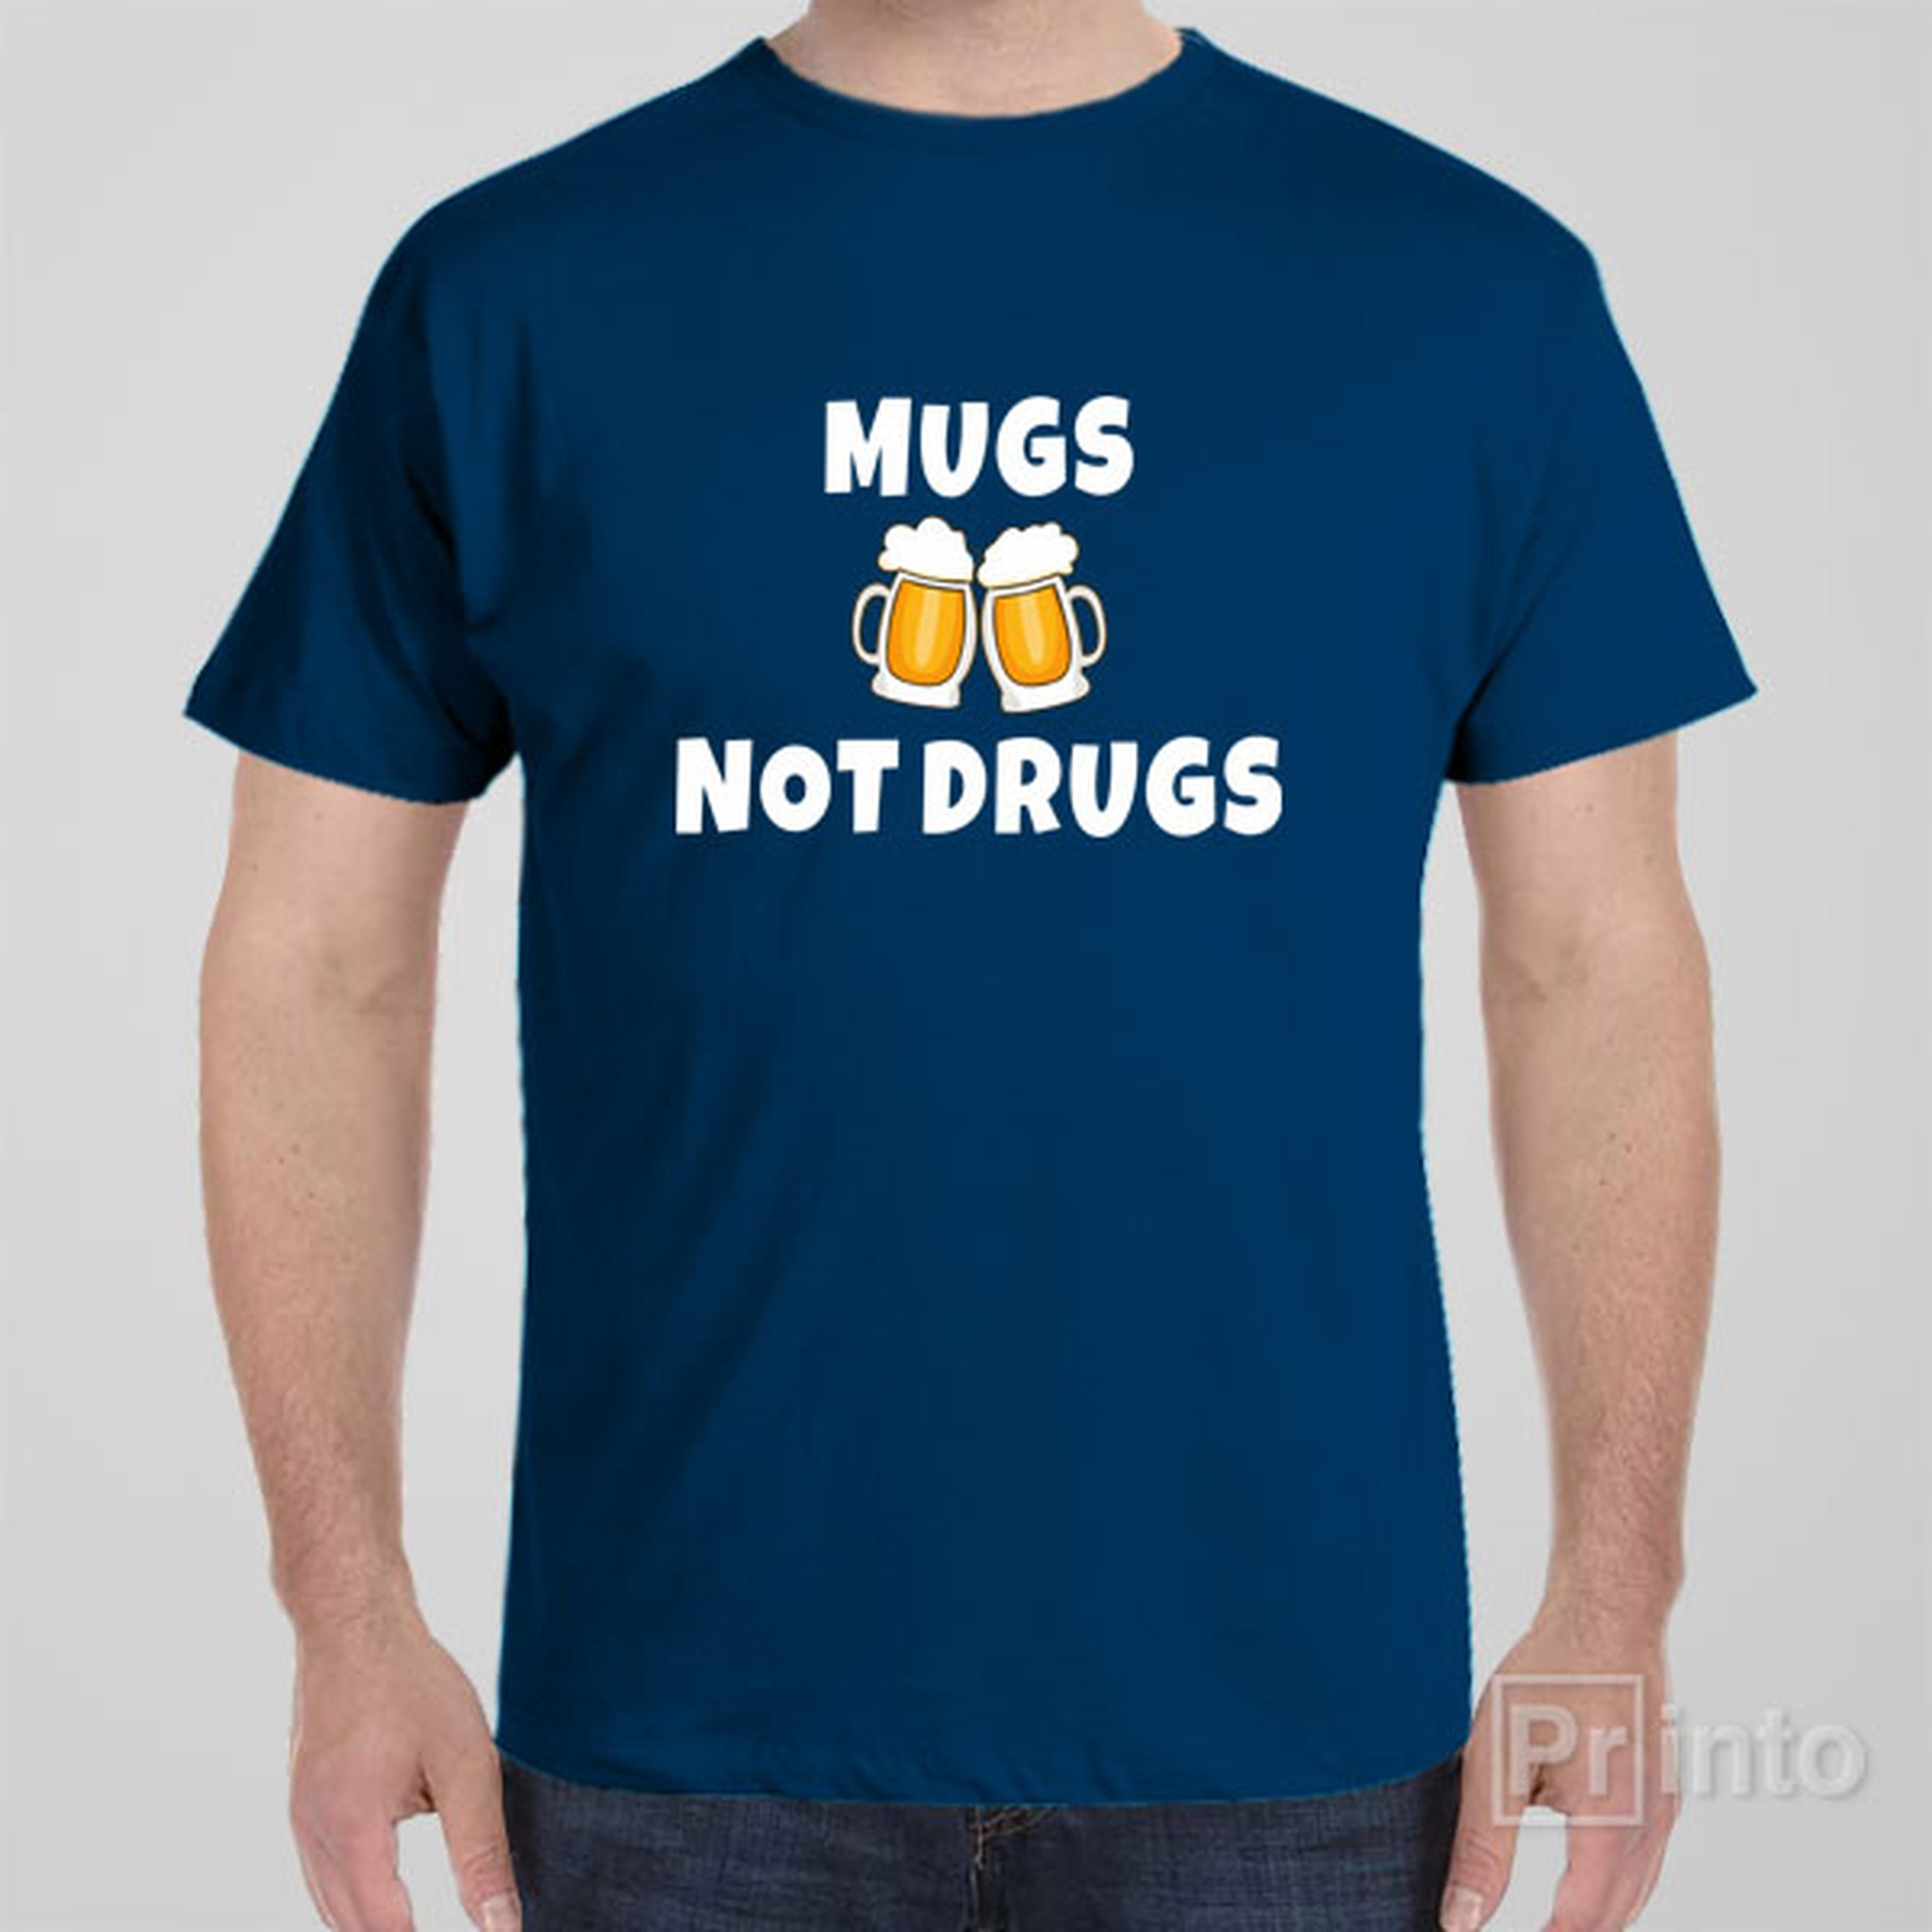 mugs-not-drugs-t-shirt